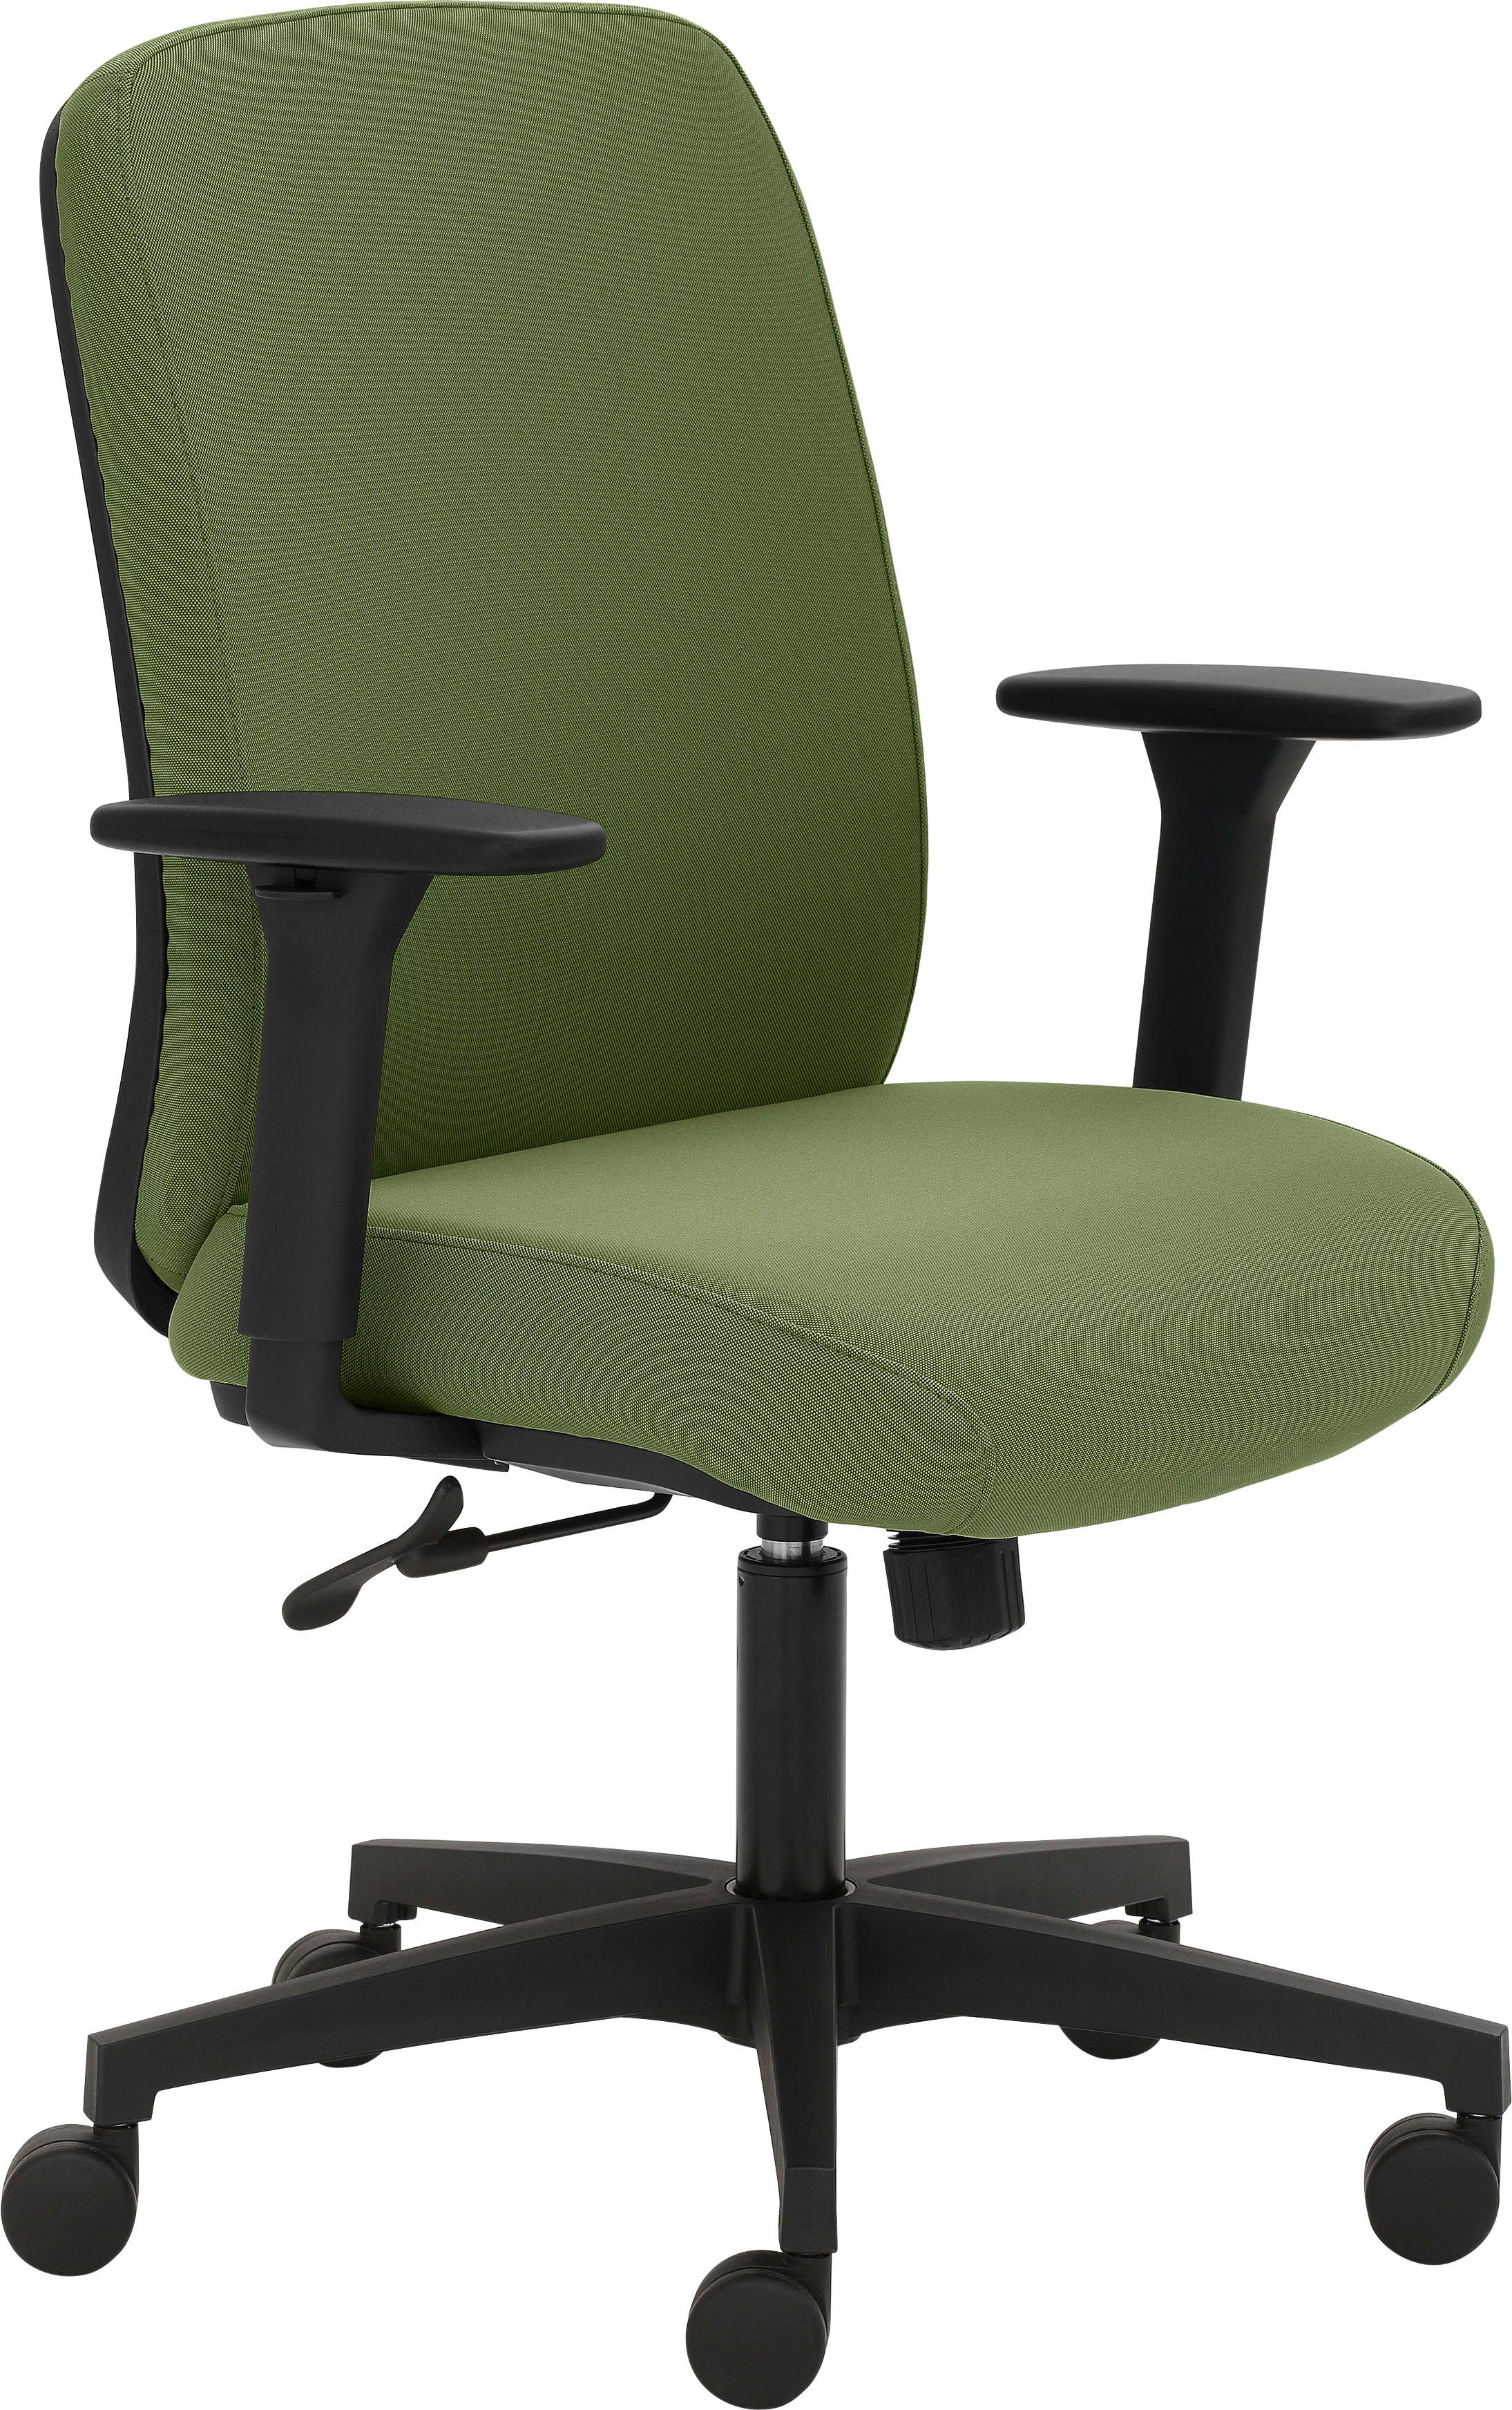 Mayer Sitzmöbel Drehstuhl 2219, GS-zertifiziert, extra starke Polsterung für maximalen Sitzkomfort Farngrün | Farngrün